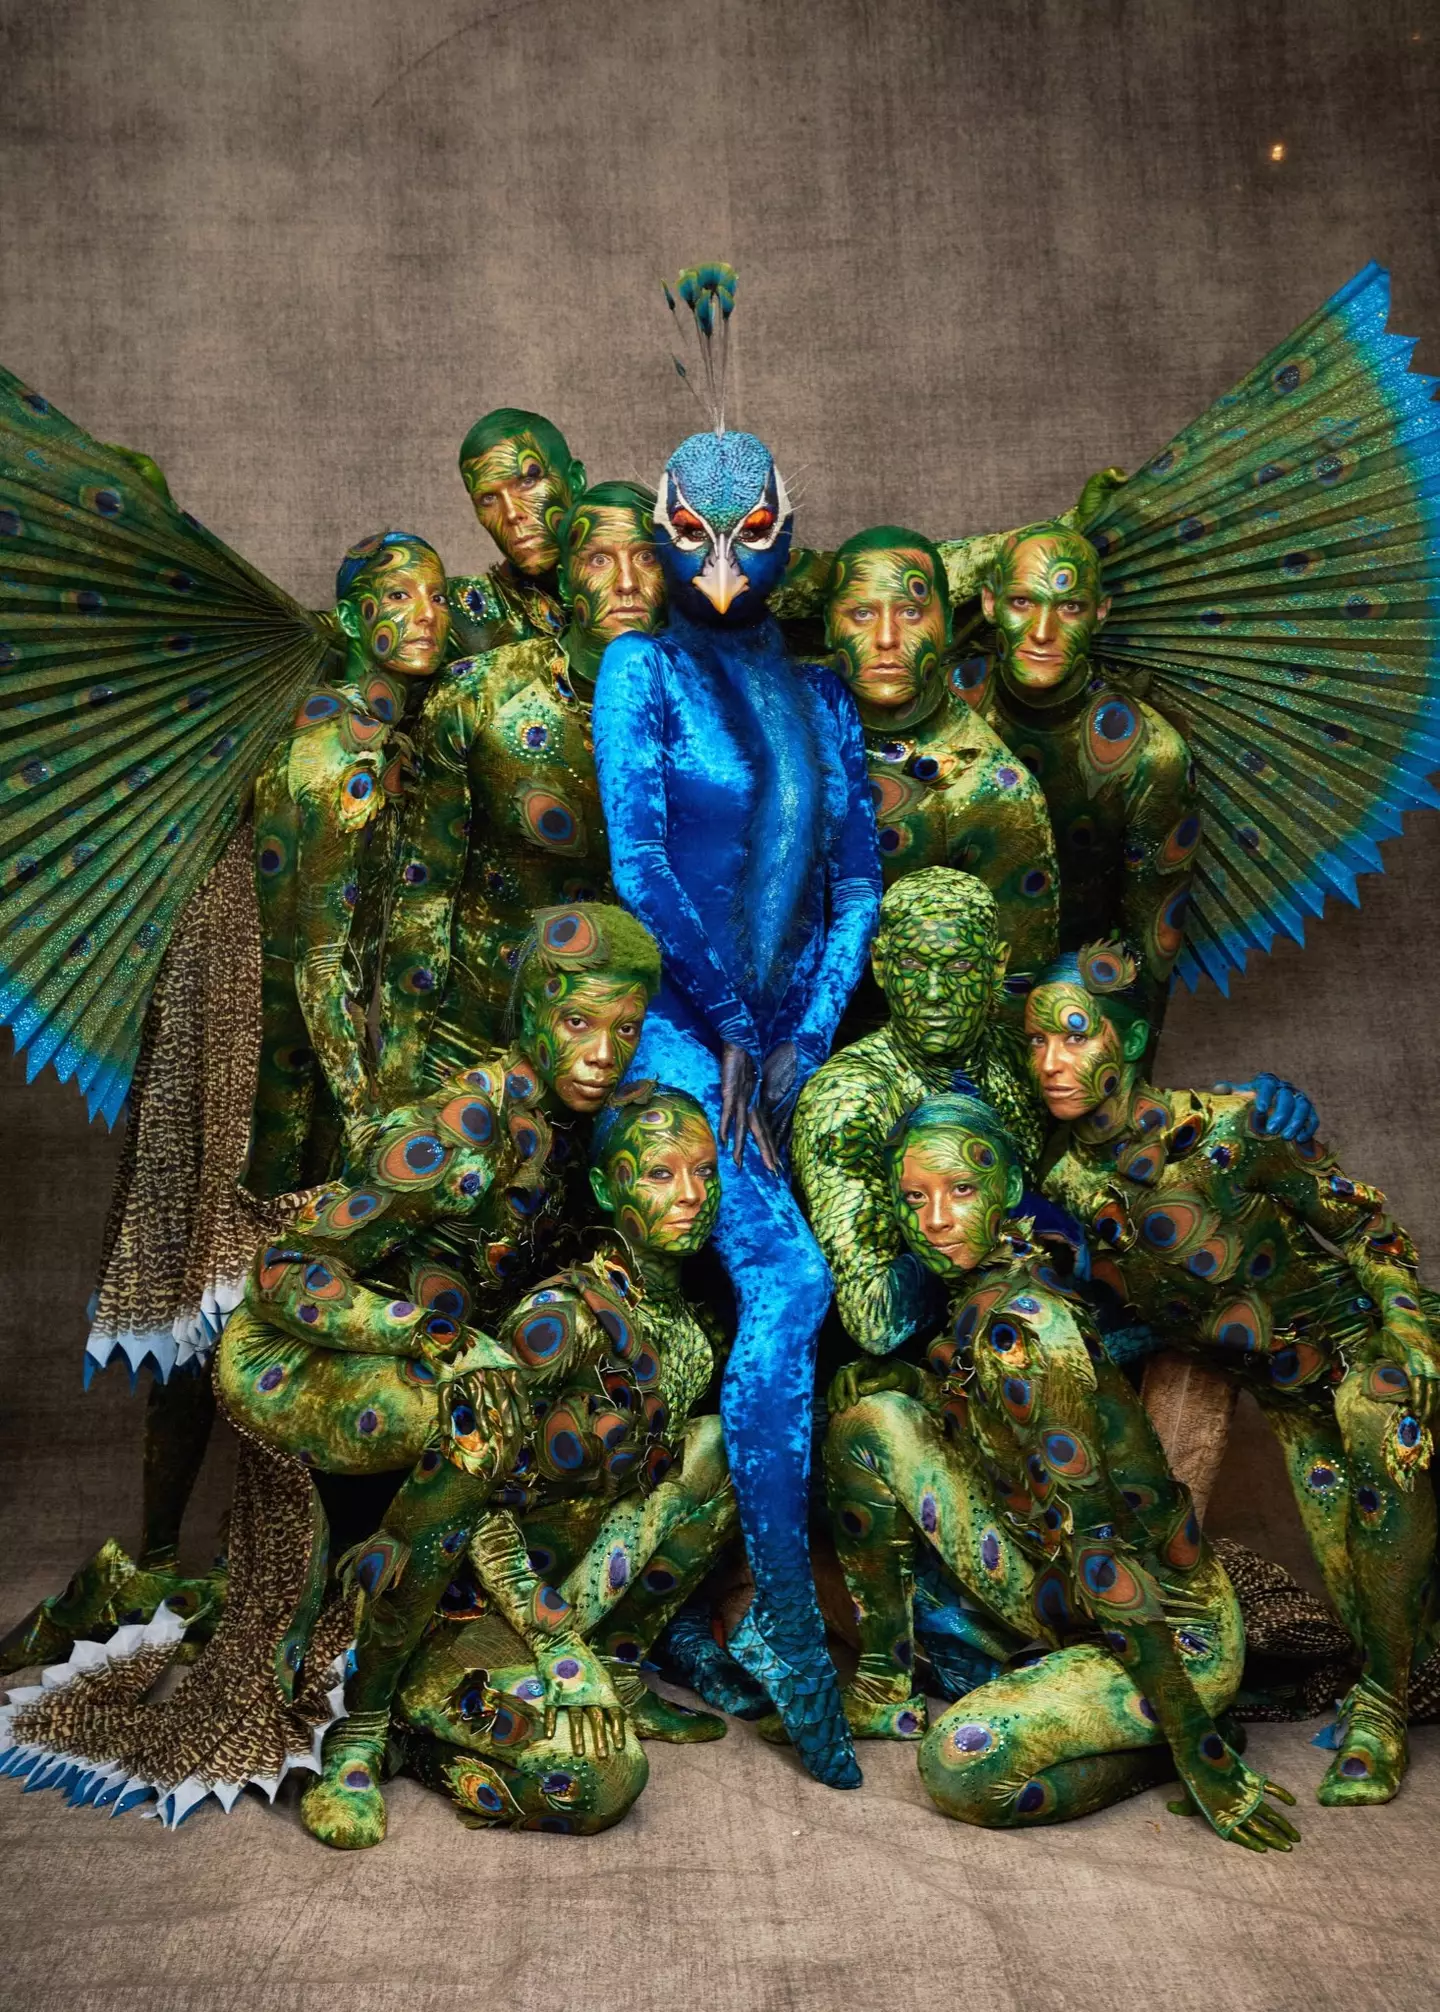 Heidi Klum's peacock costume.